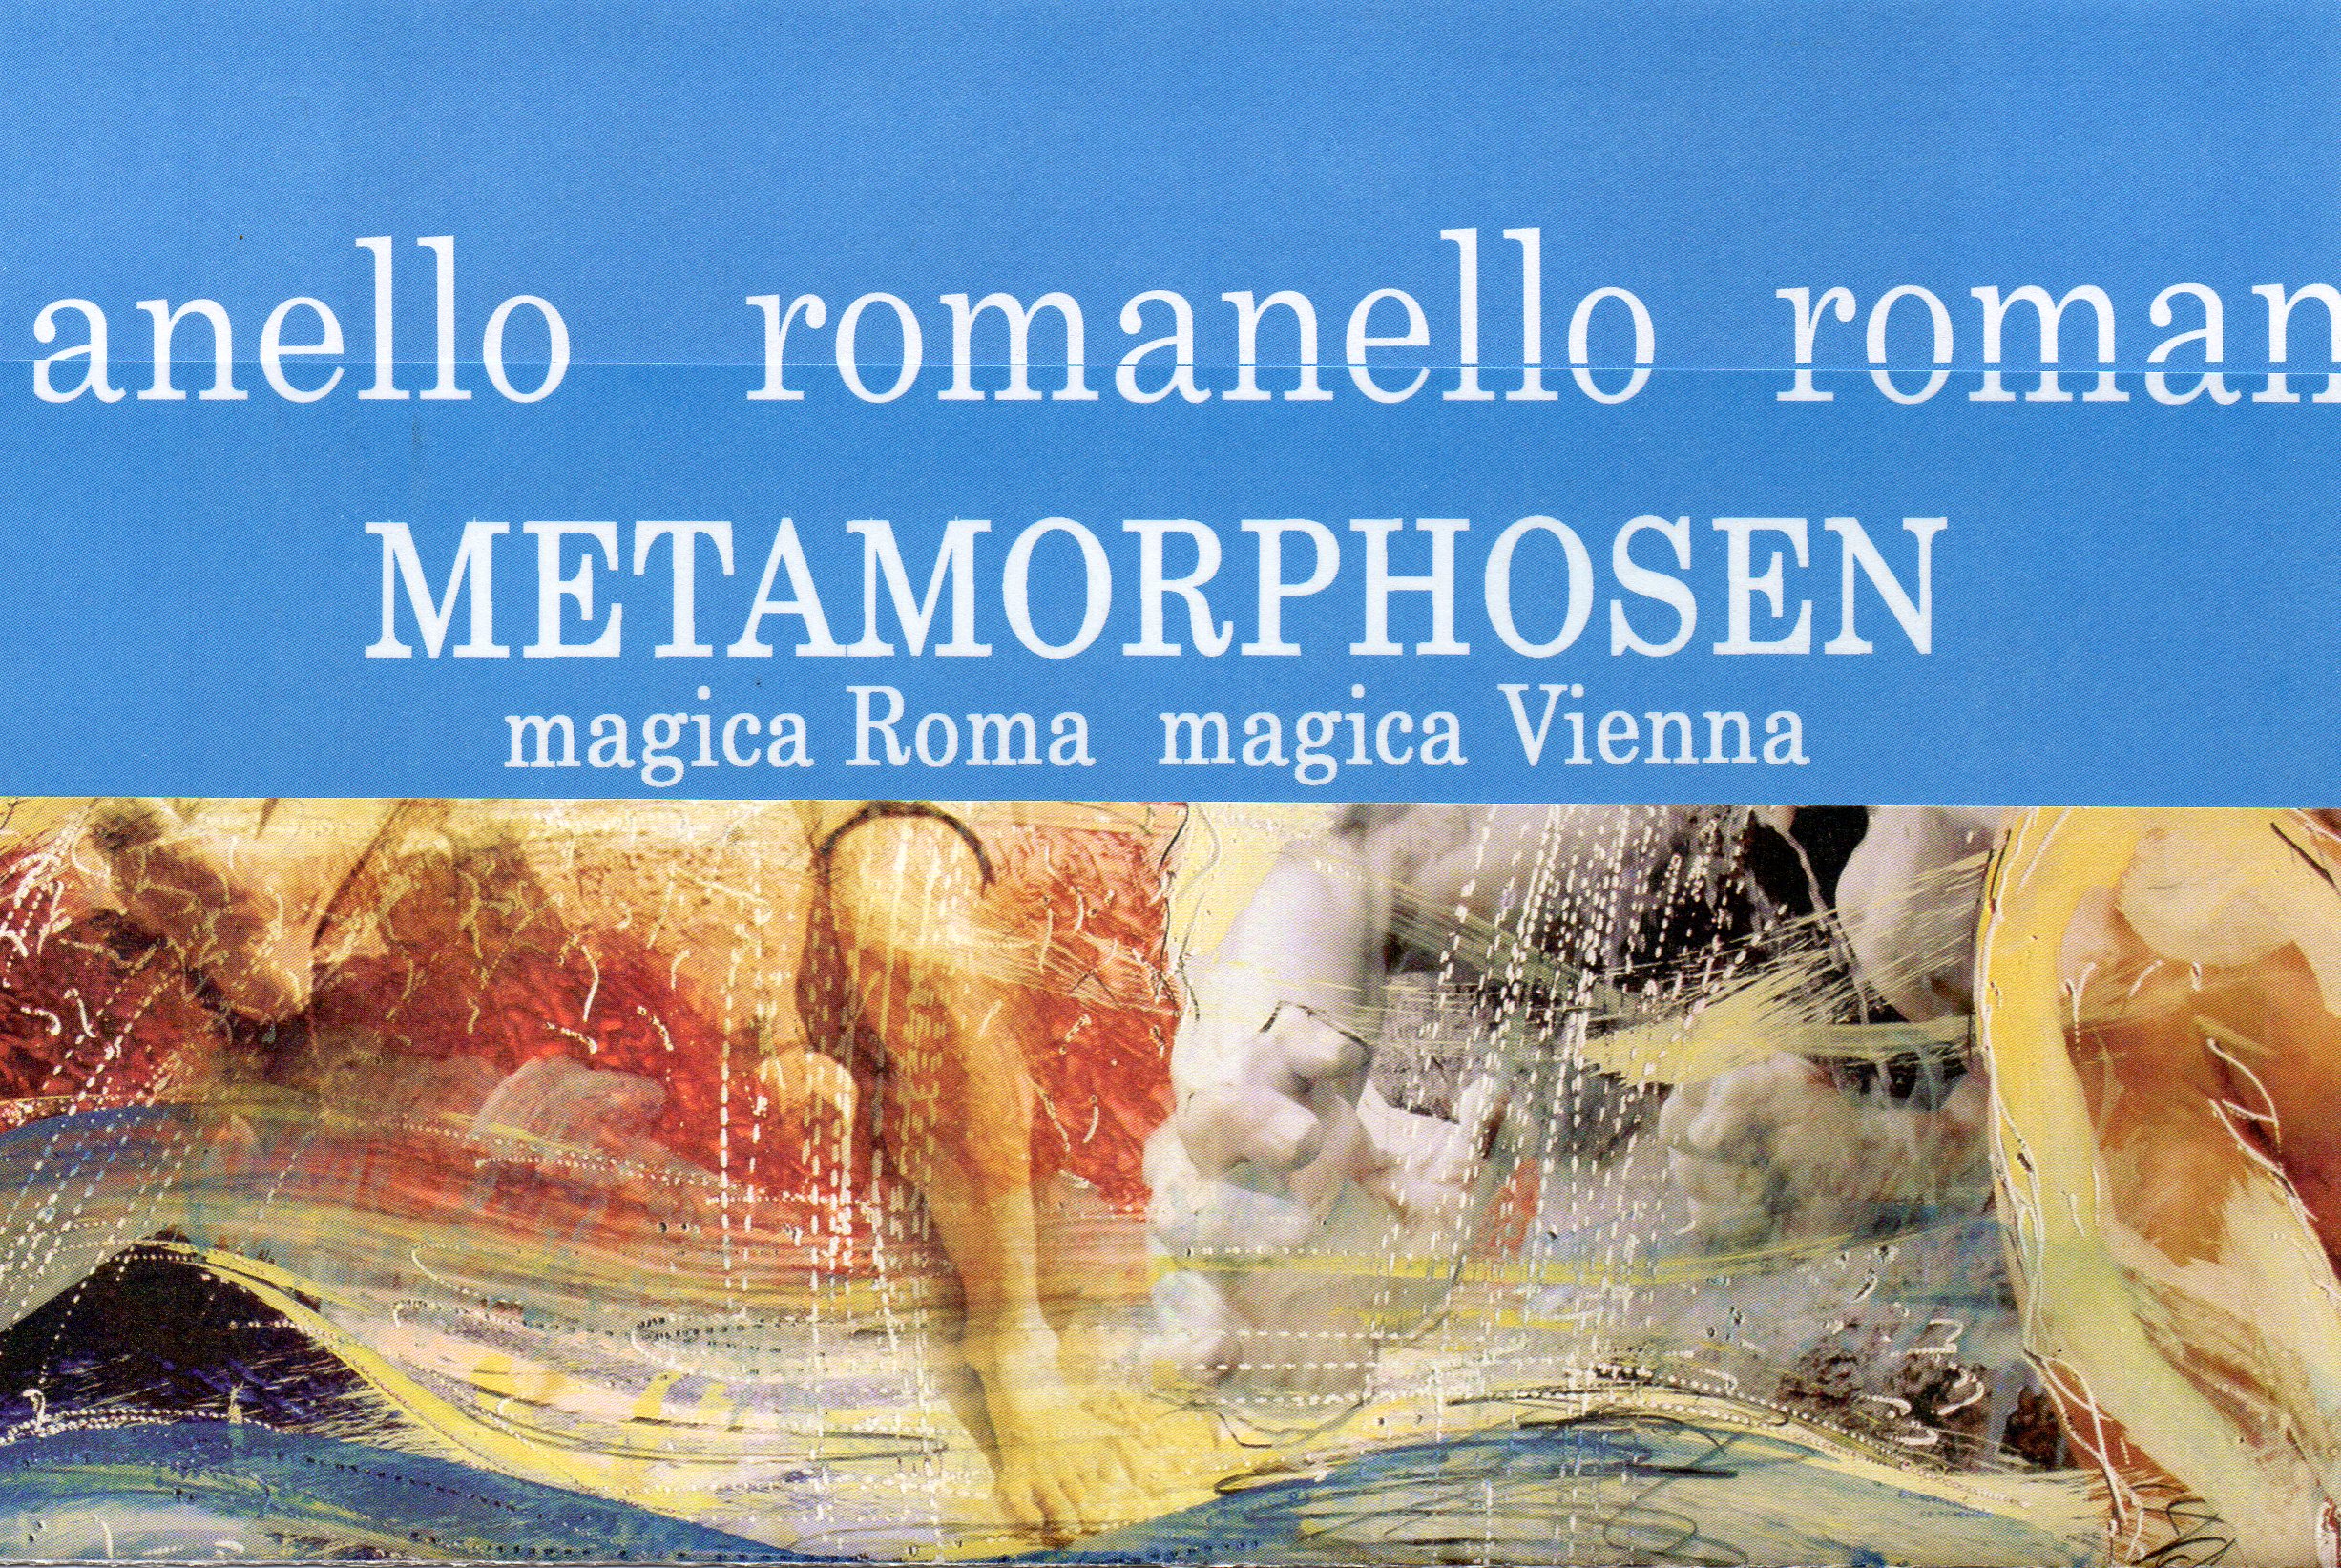 Metamorphosen – magica Roma magica Vienna